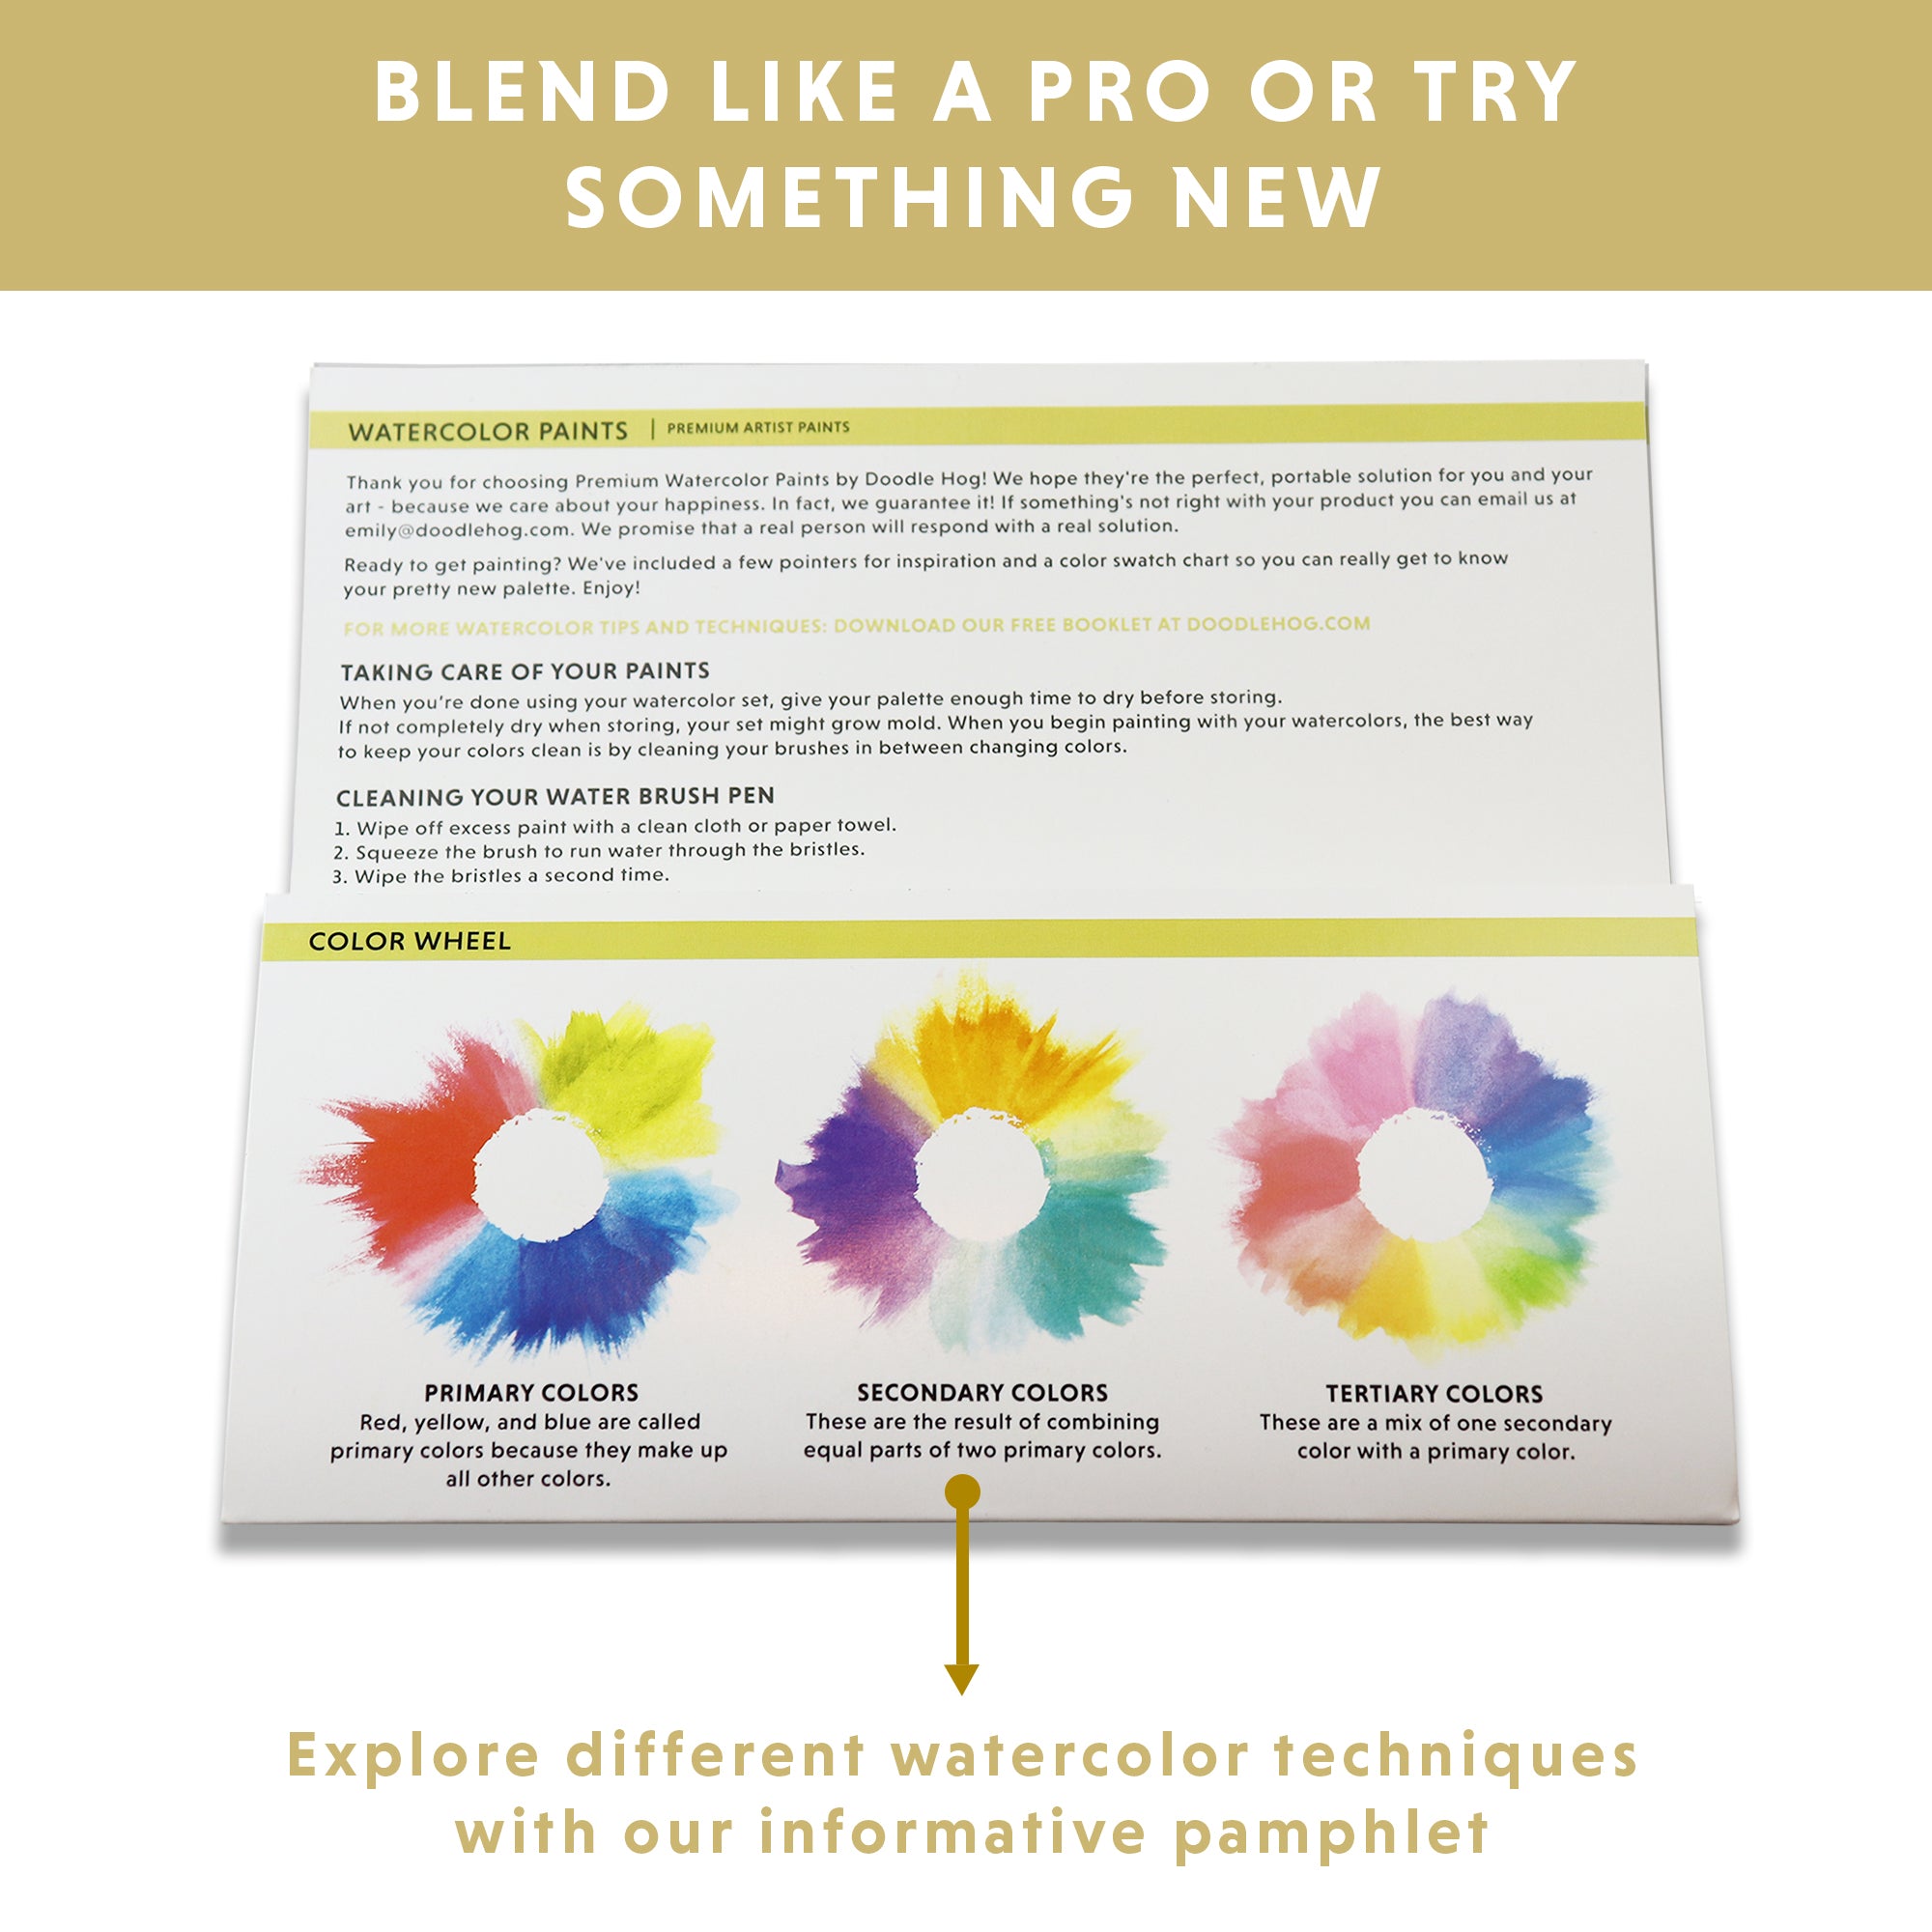 Pagos Watercolor Paint Set – Art Kit of 36 Vivid Colors W 10 Sheets Water Color Paper – Refillable Brush Sponge Drawing Pencil, Brush, Gift Set for